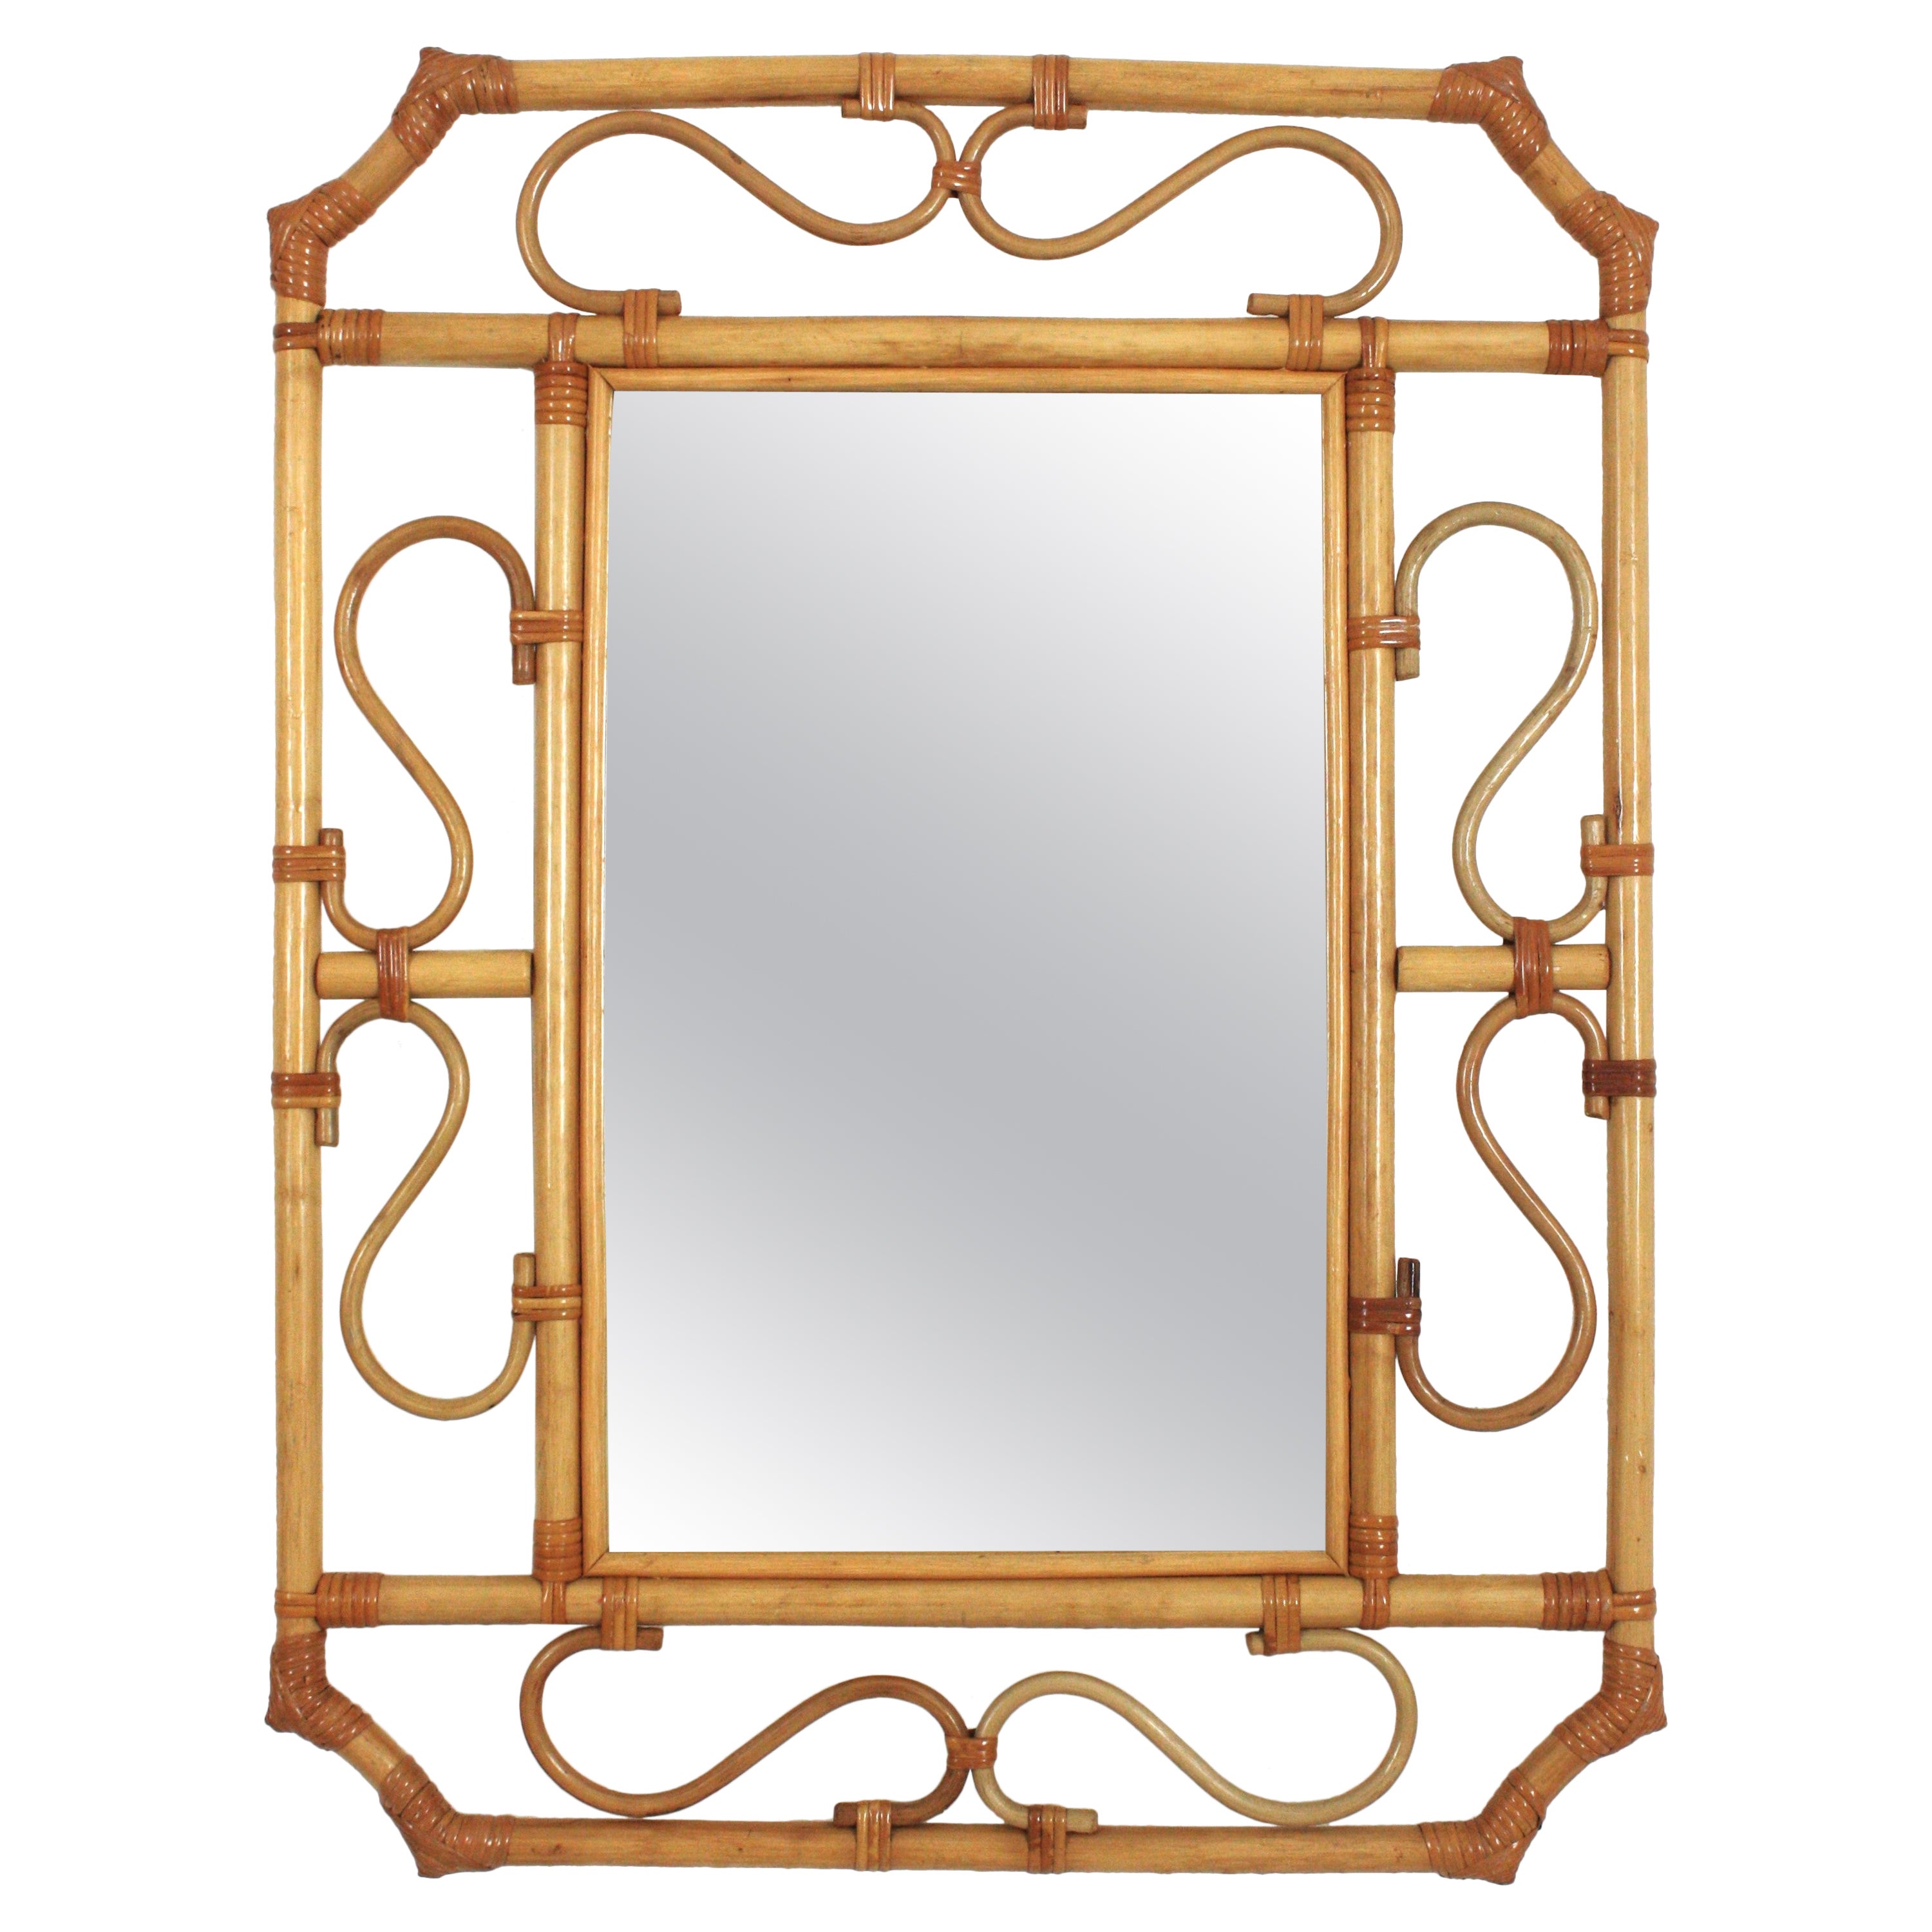 Franco Albini Style Rattan Octagonal Mirror, Italy, 1960s For Sale